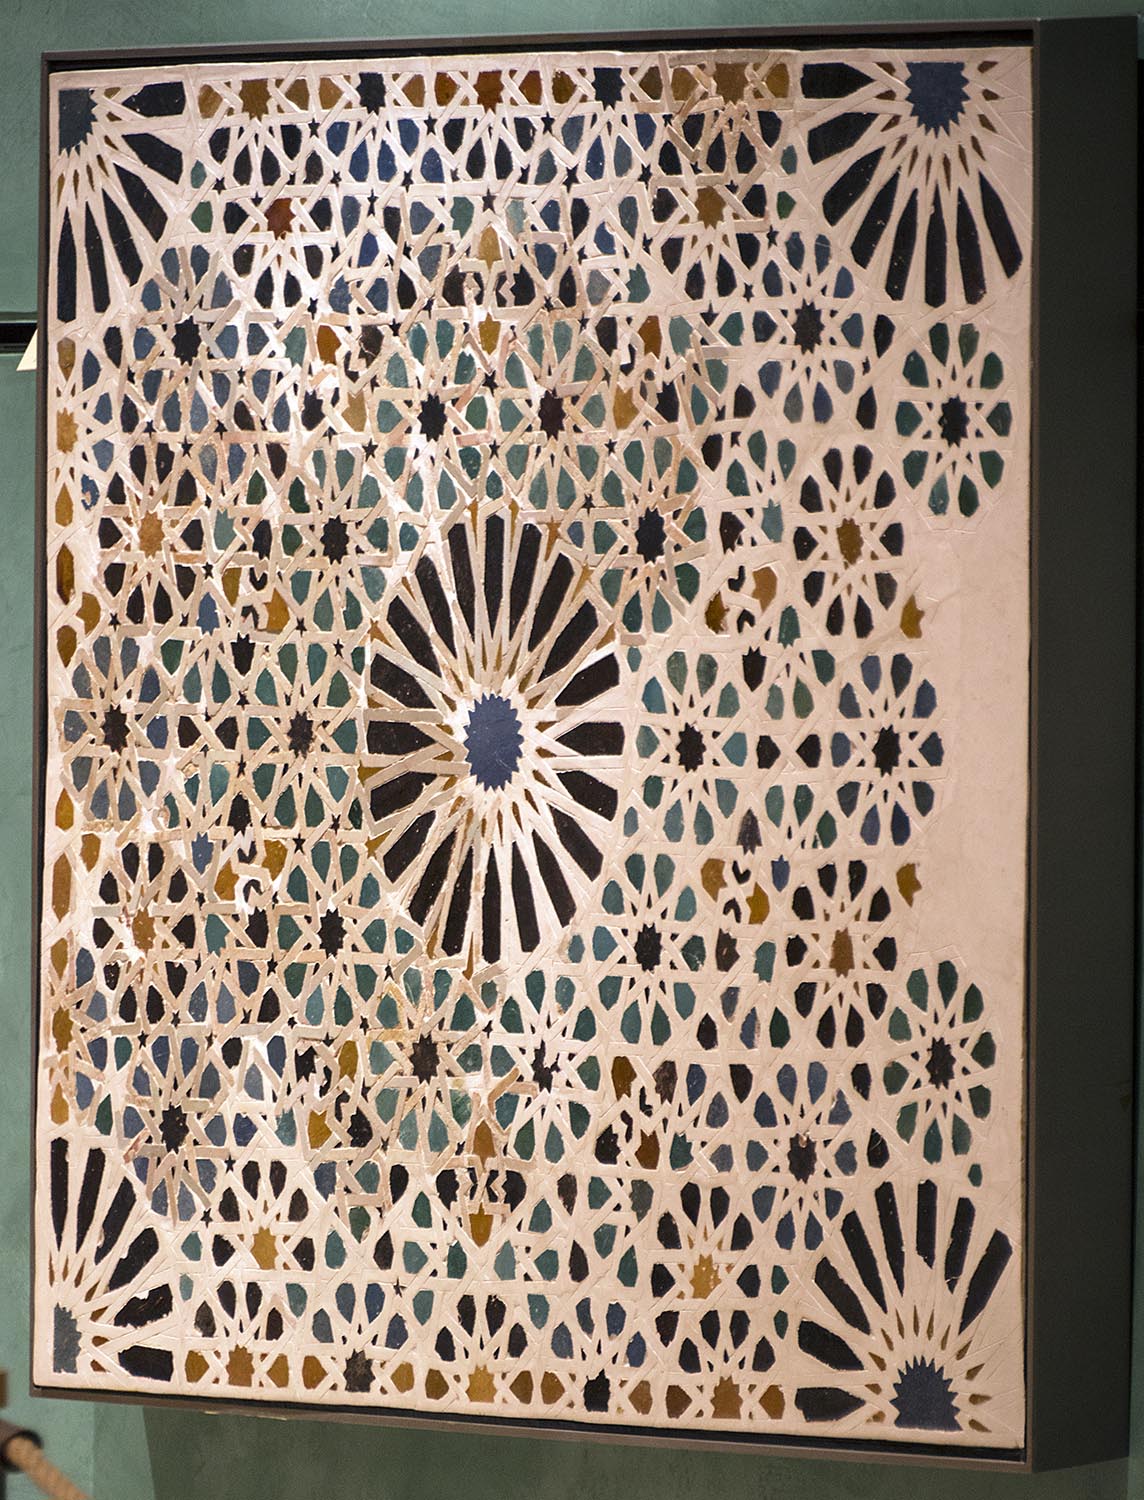 Tilework on display at Alhambra Museum